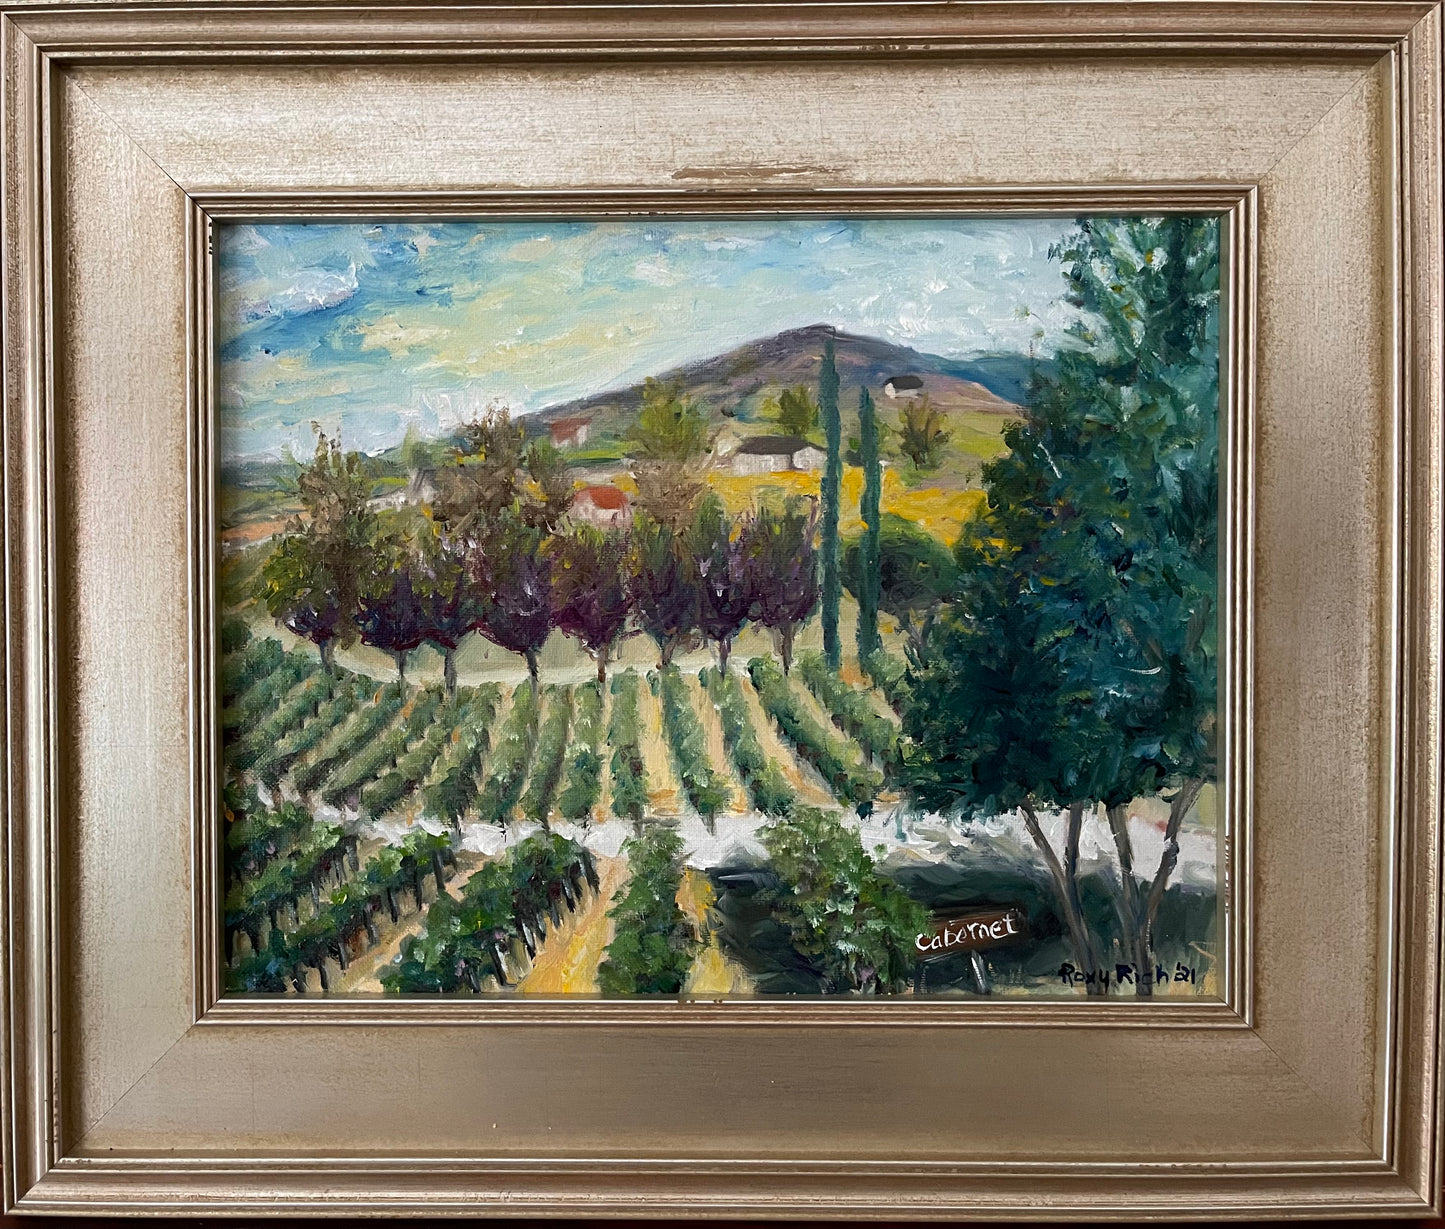 Cabernet Lot at Oak Mountain Winery, Temecula-Original Oil Landscape Painting Framed